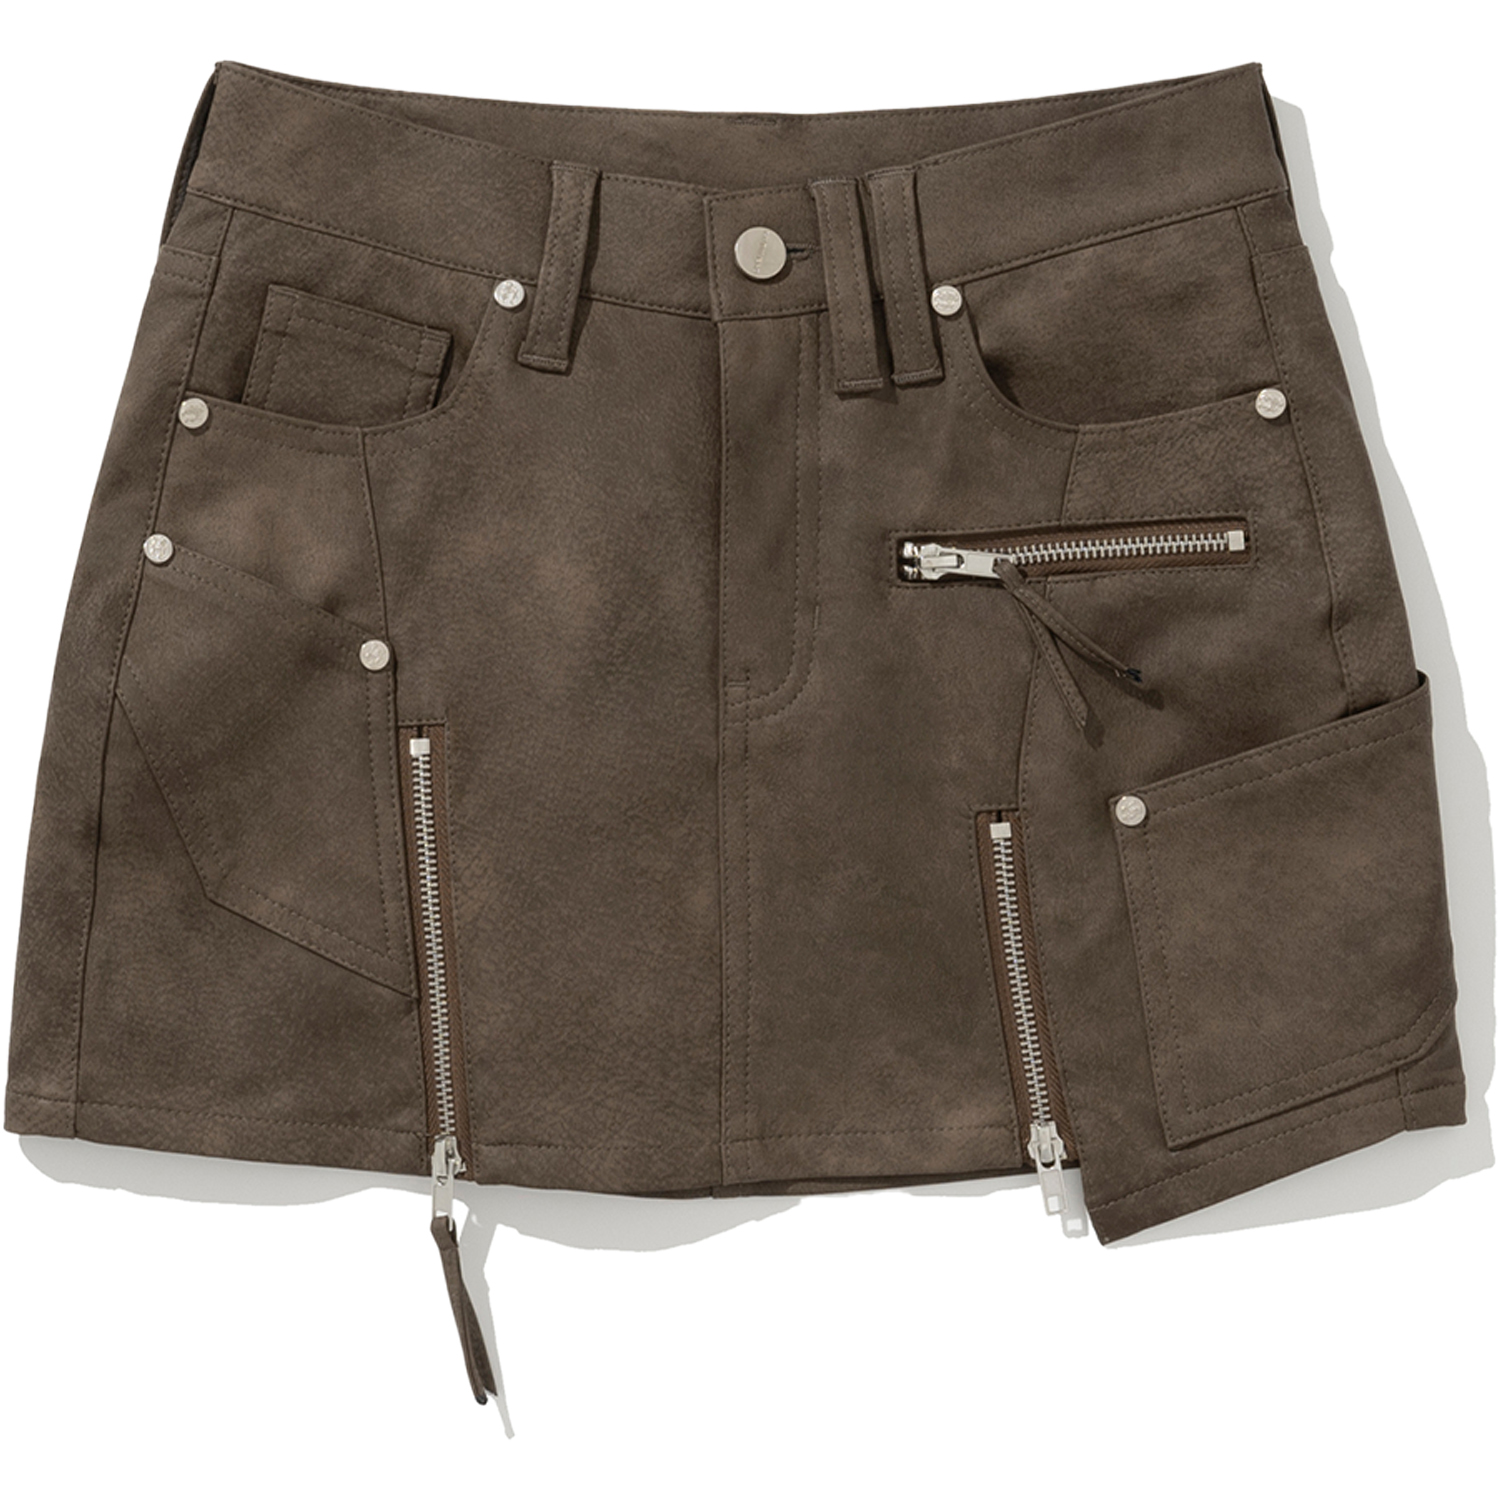 W Vintage Leather Zipper Mini Skirt - Brown,NOT4NERD